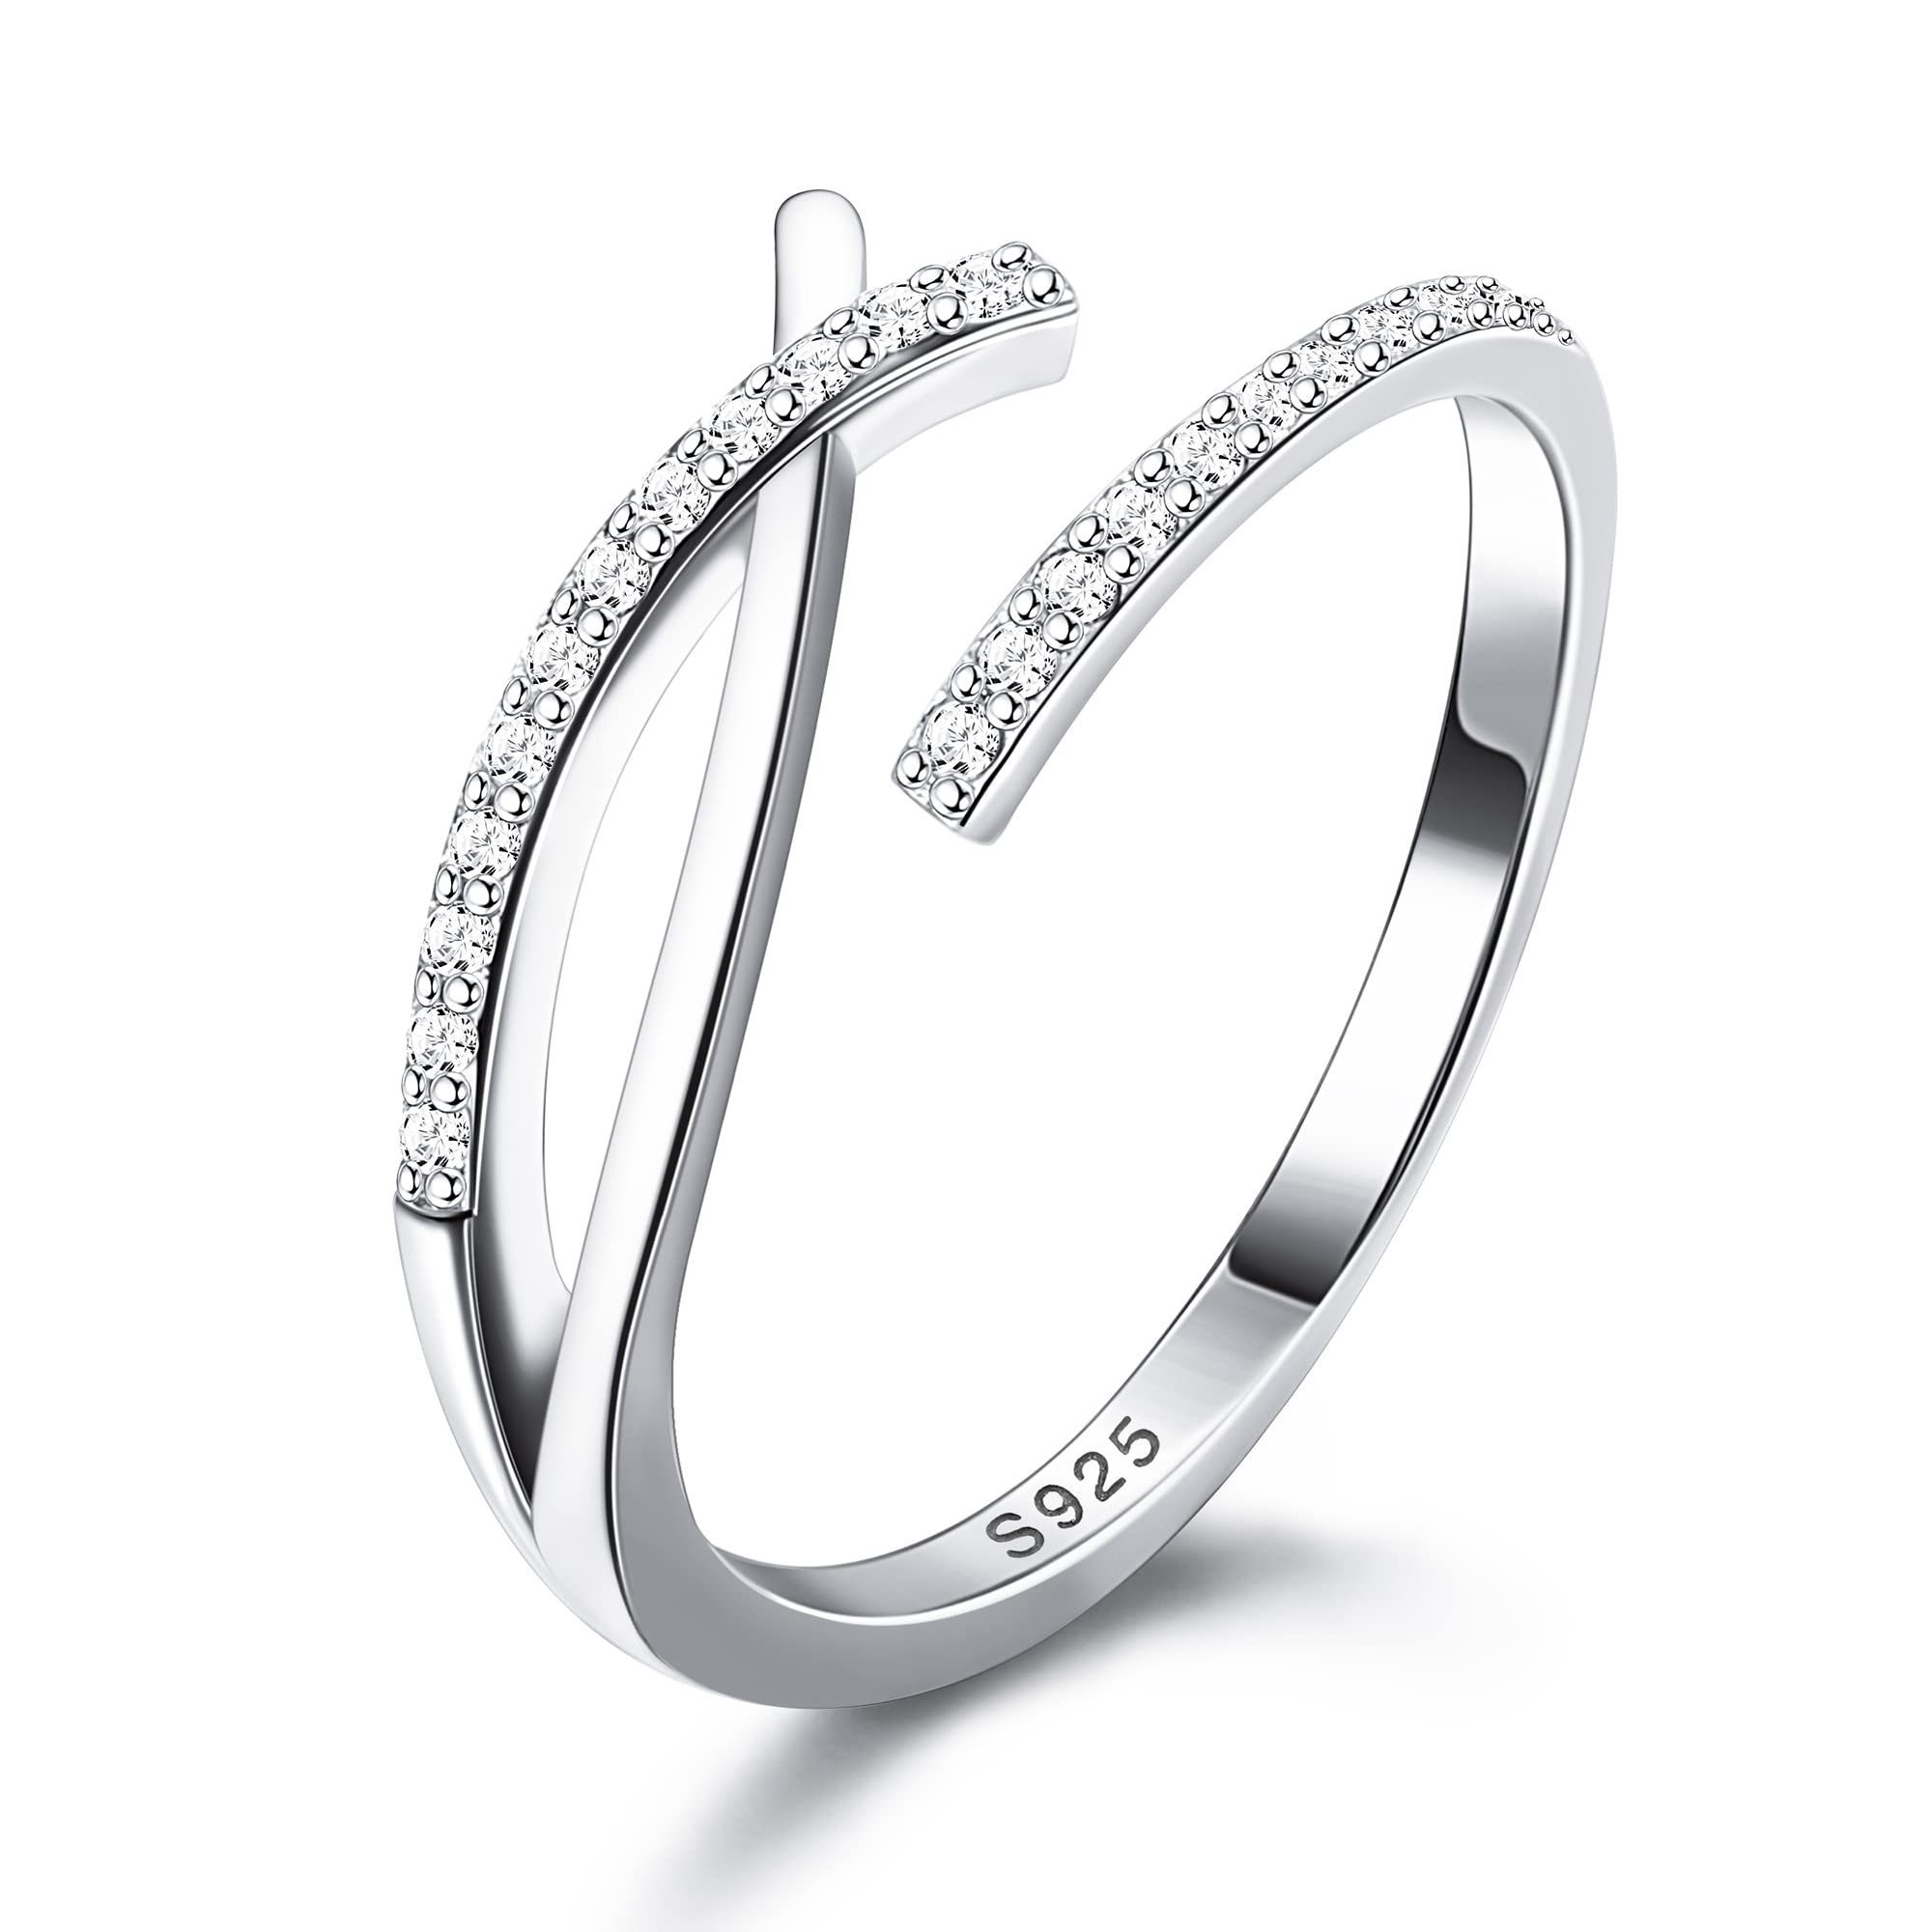 POCHUMIDUU Fingerring S925 Silber Damen Eröffnung Mode personalisierte Silber Ring, Silberschmuck für Frauen aus 925er Sterlingsilber | Fingerringe